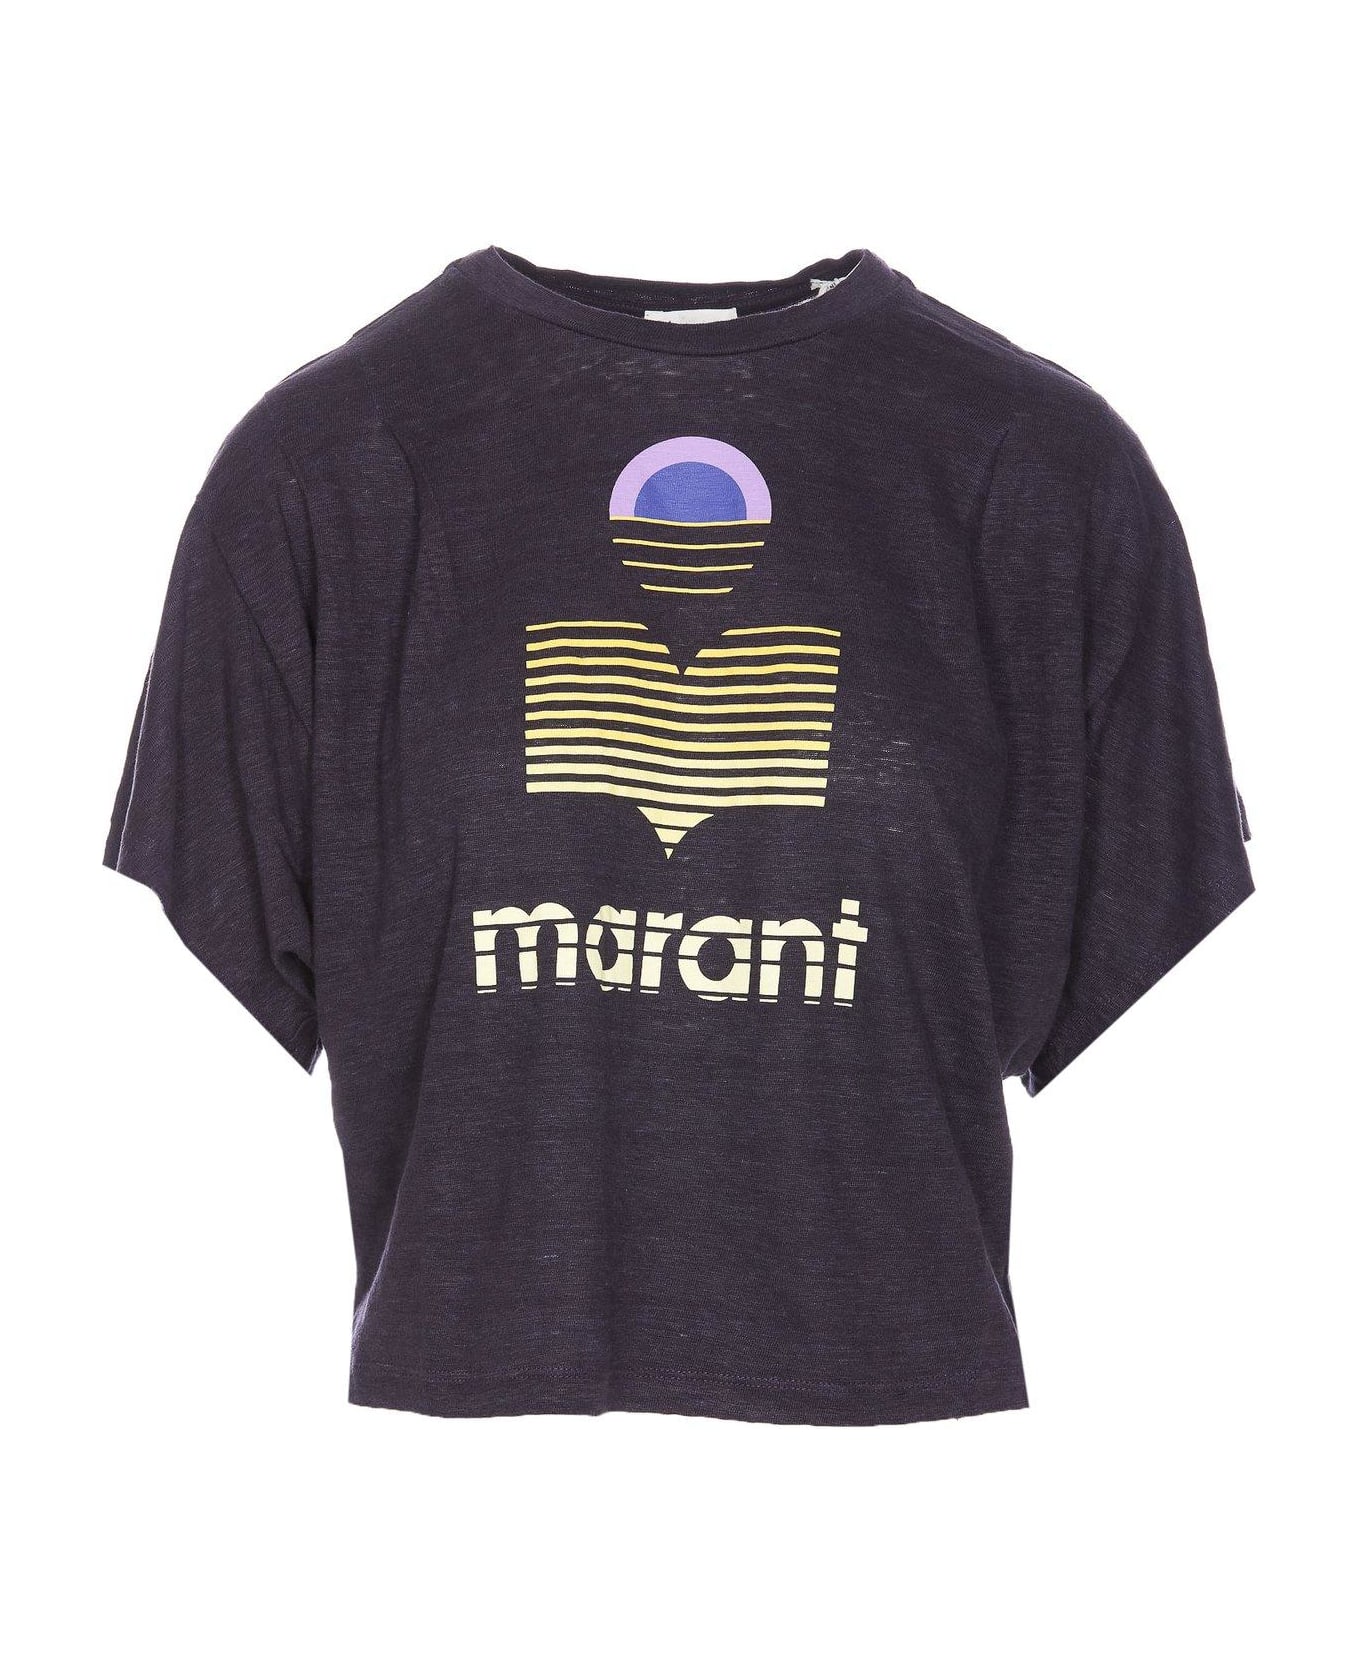 Marant Étoile Logo Printed Cropped T-shirt - FADED NIGHT Tシャツ